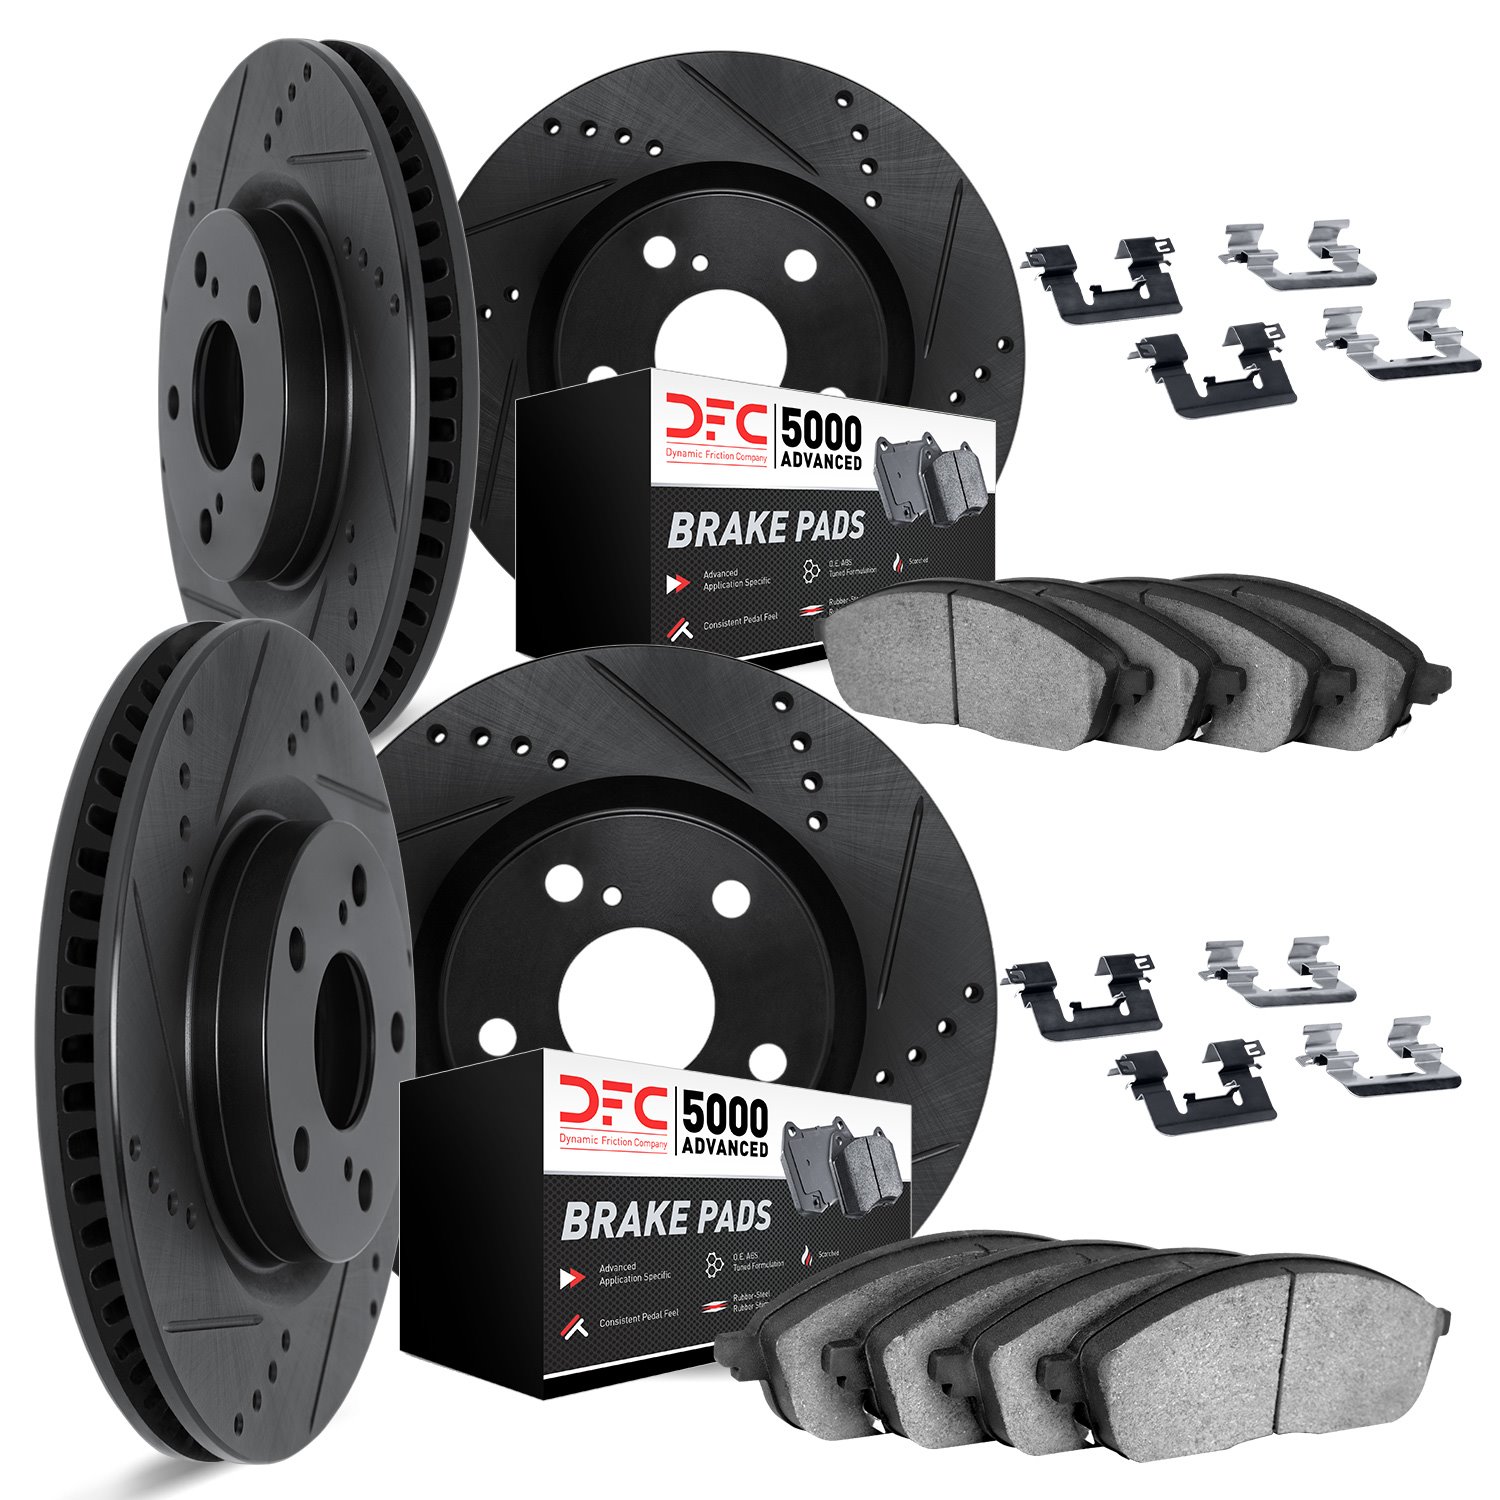 8514-75008 Drilled/Slotted Brake Rotors w/5000 Advanced Brake Pads Kit & Hardware [Black], Fits Select Lexus/Toyota/Scion, Posit